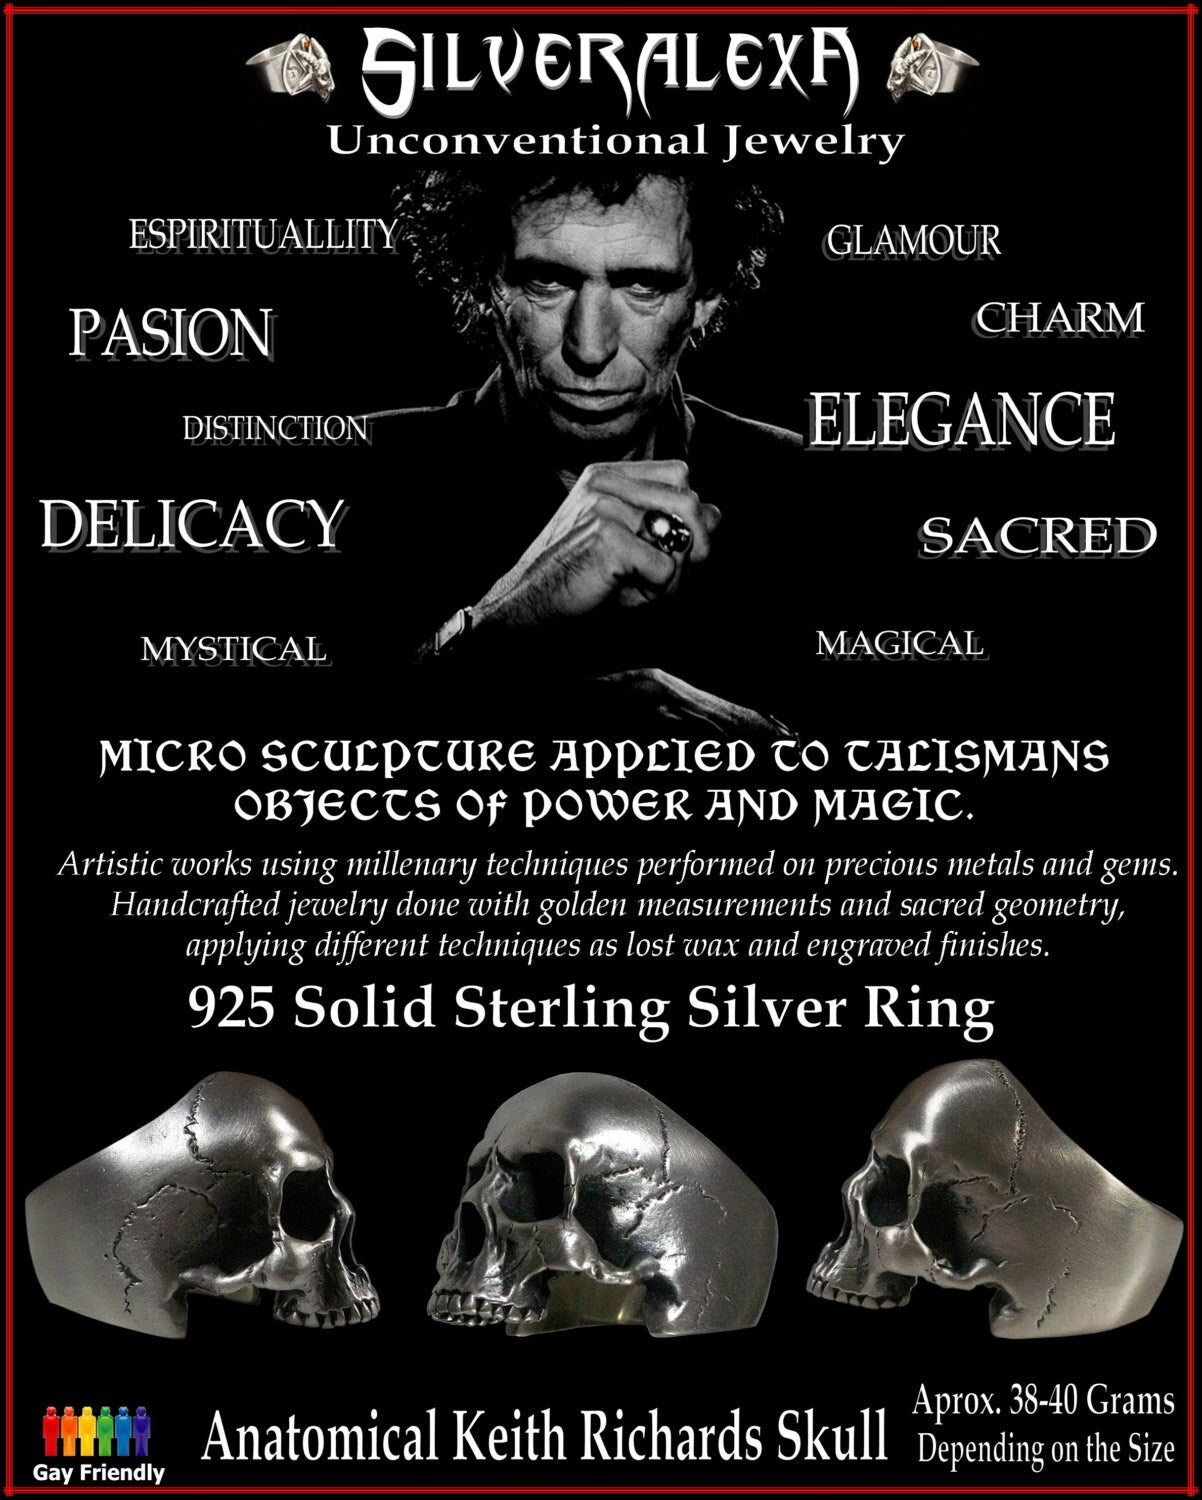 Skull Ring - Sterling Silver Anatomical Keith Richards Skull Ring